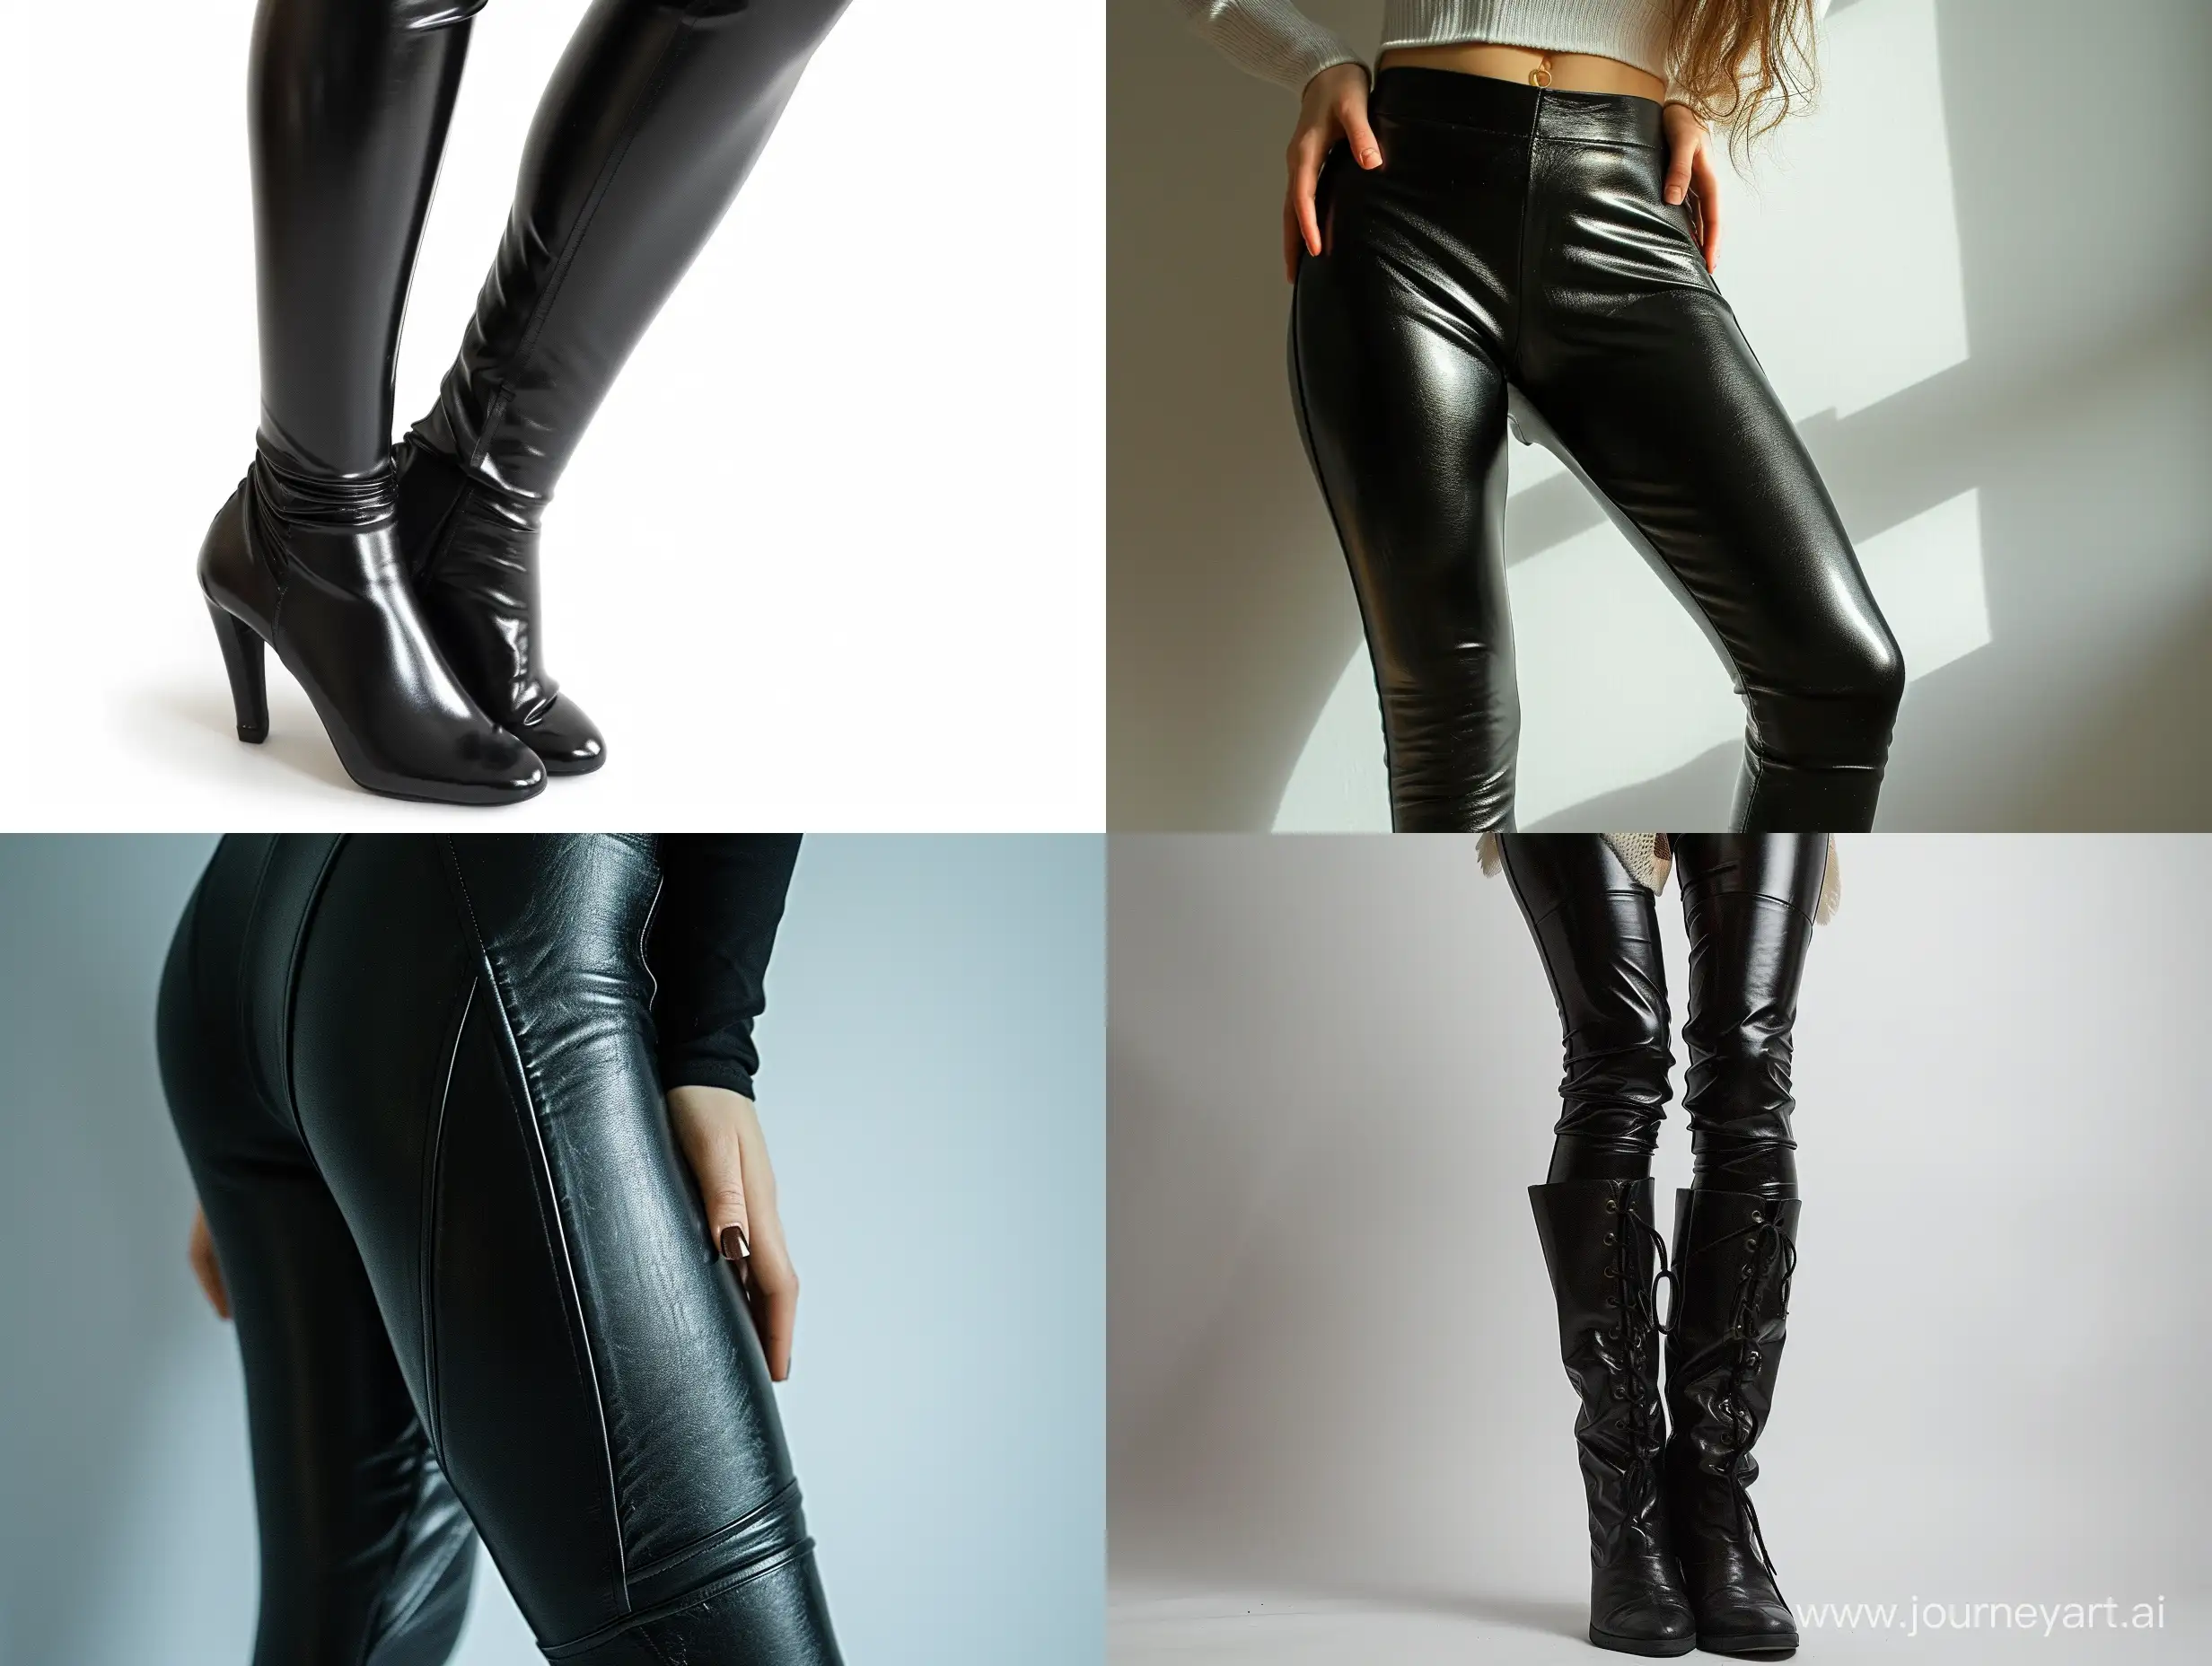 Fashionable-Crossdresser-in-Stylish-Leather-Leggings